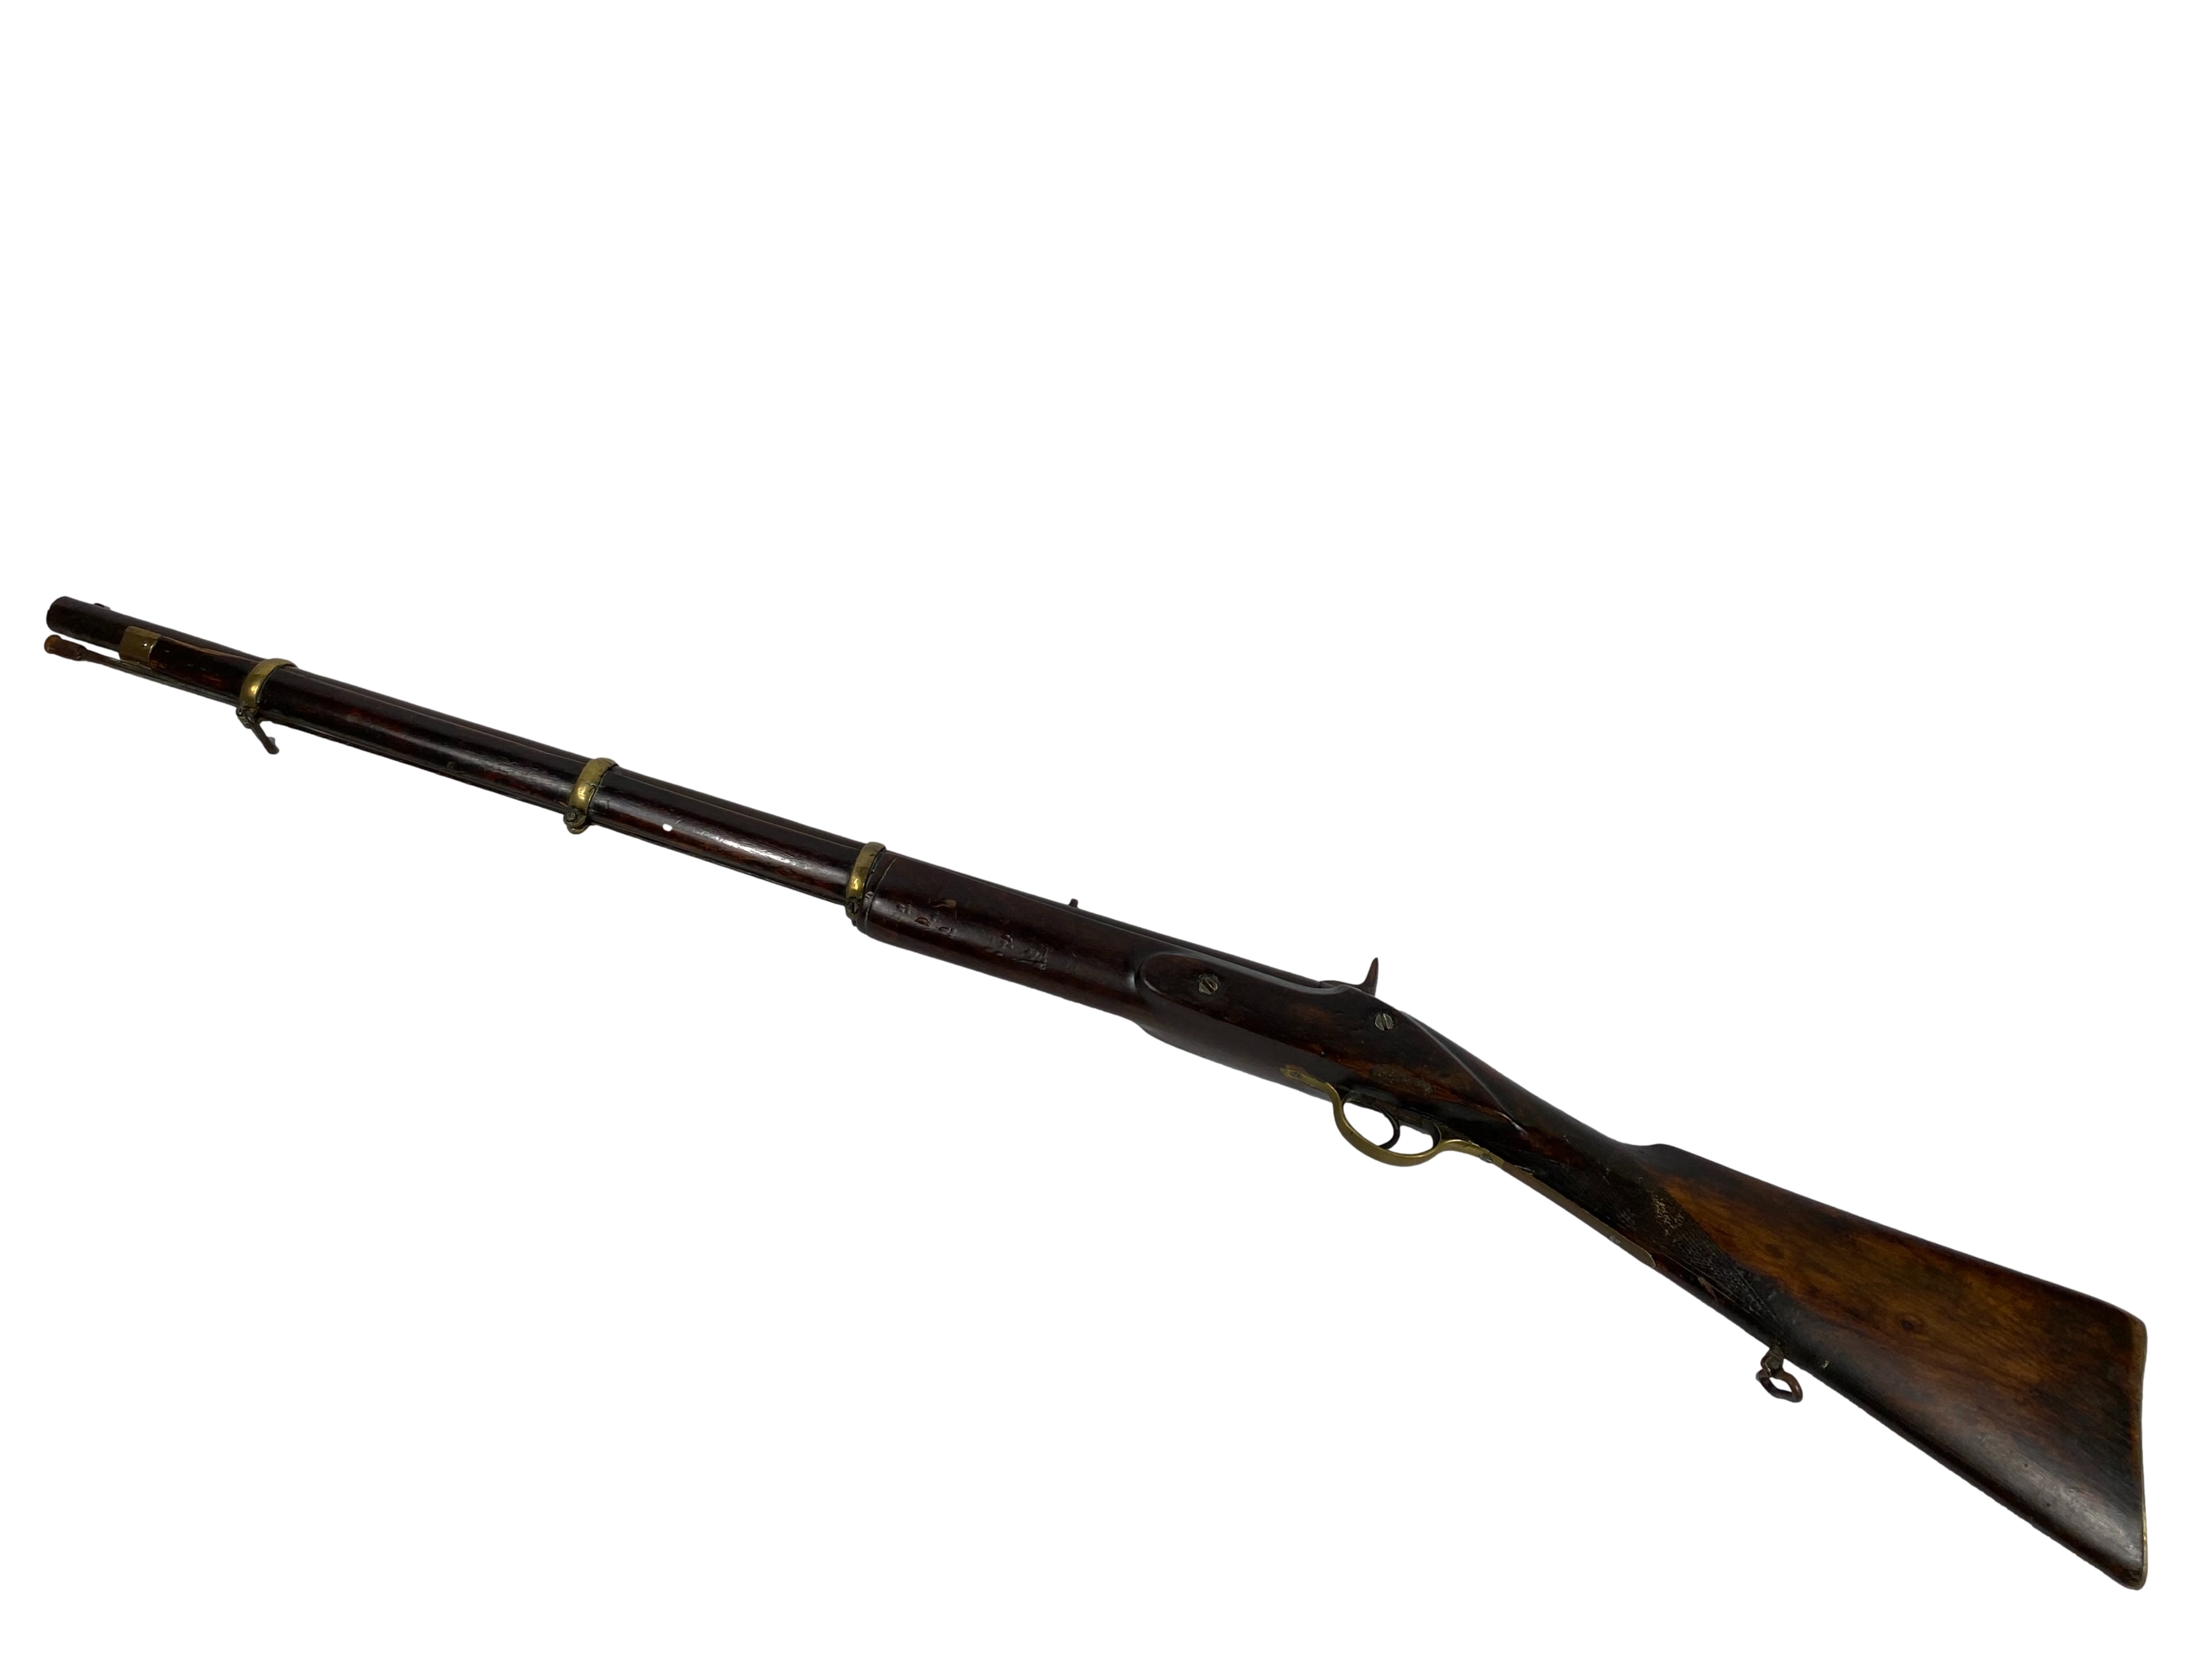 19th century percussion rifle